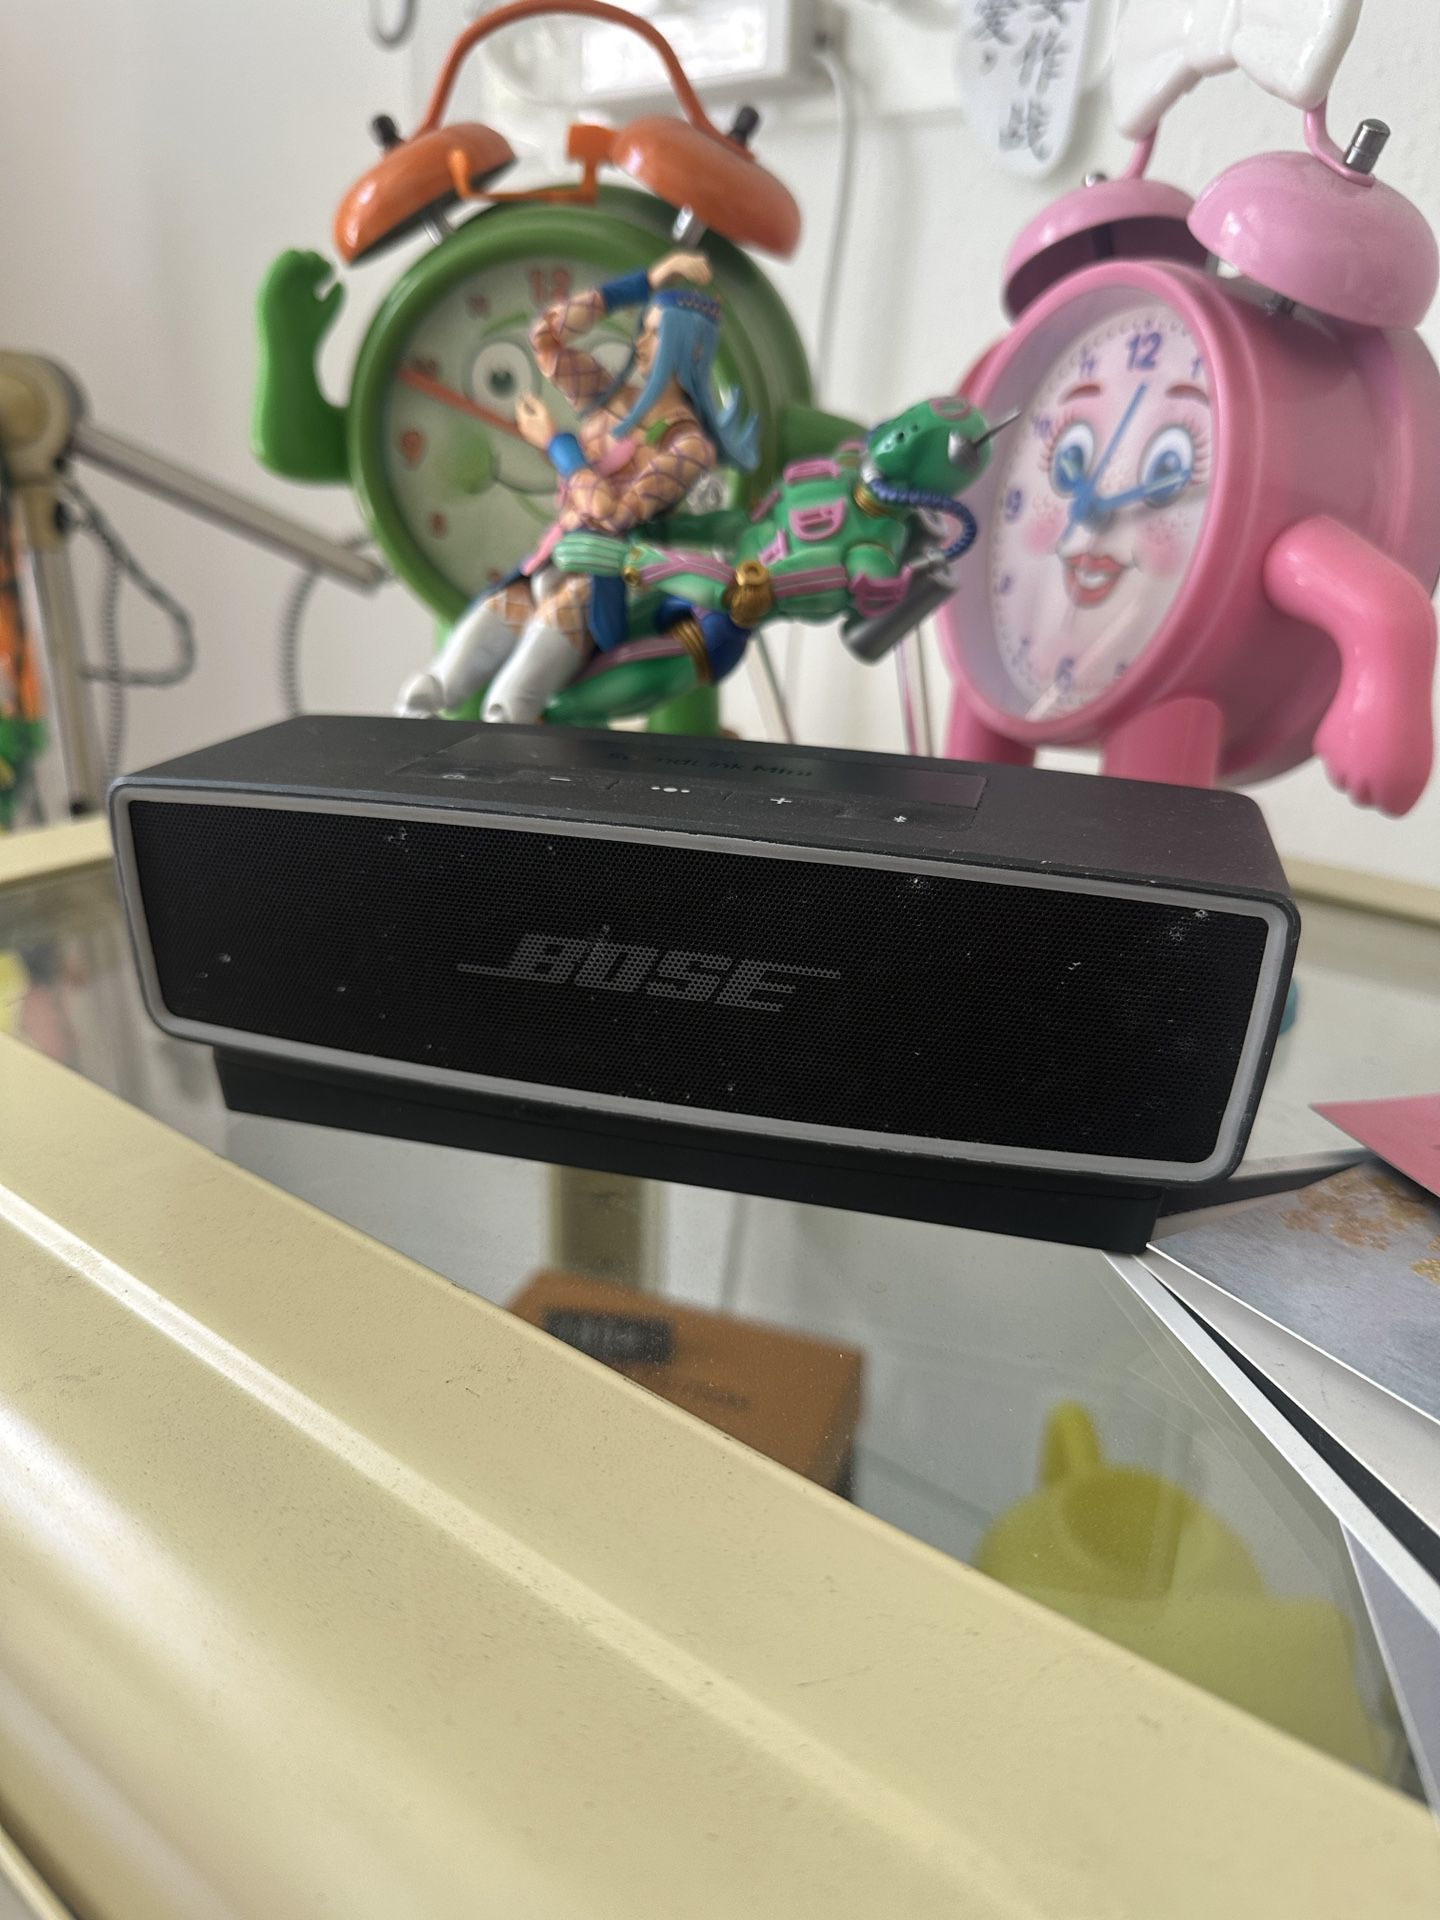 Bose SoundLink Mini I Special Edition